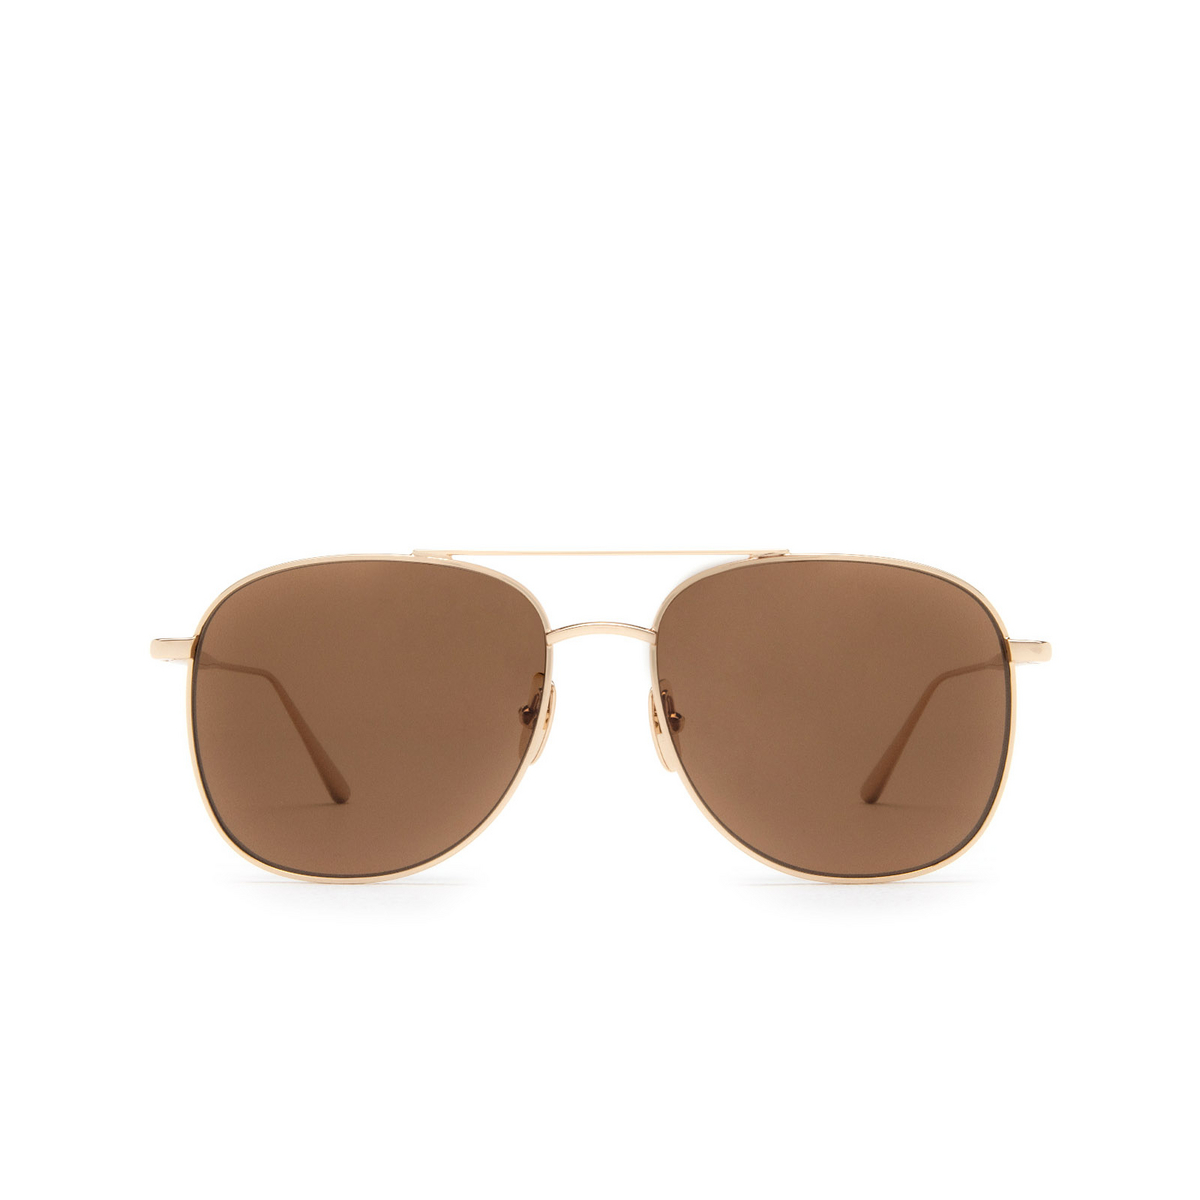 Chimi® Square Sunglasses: Pilot color Brown - front view